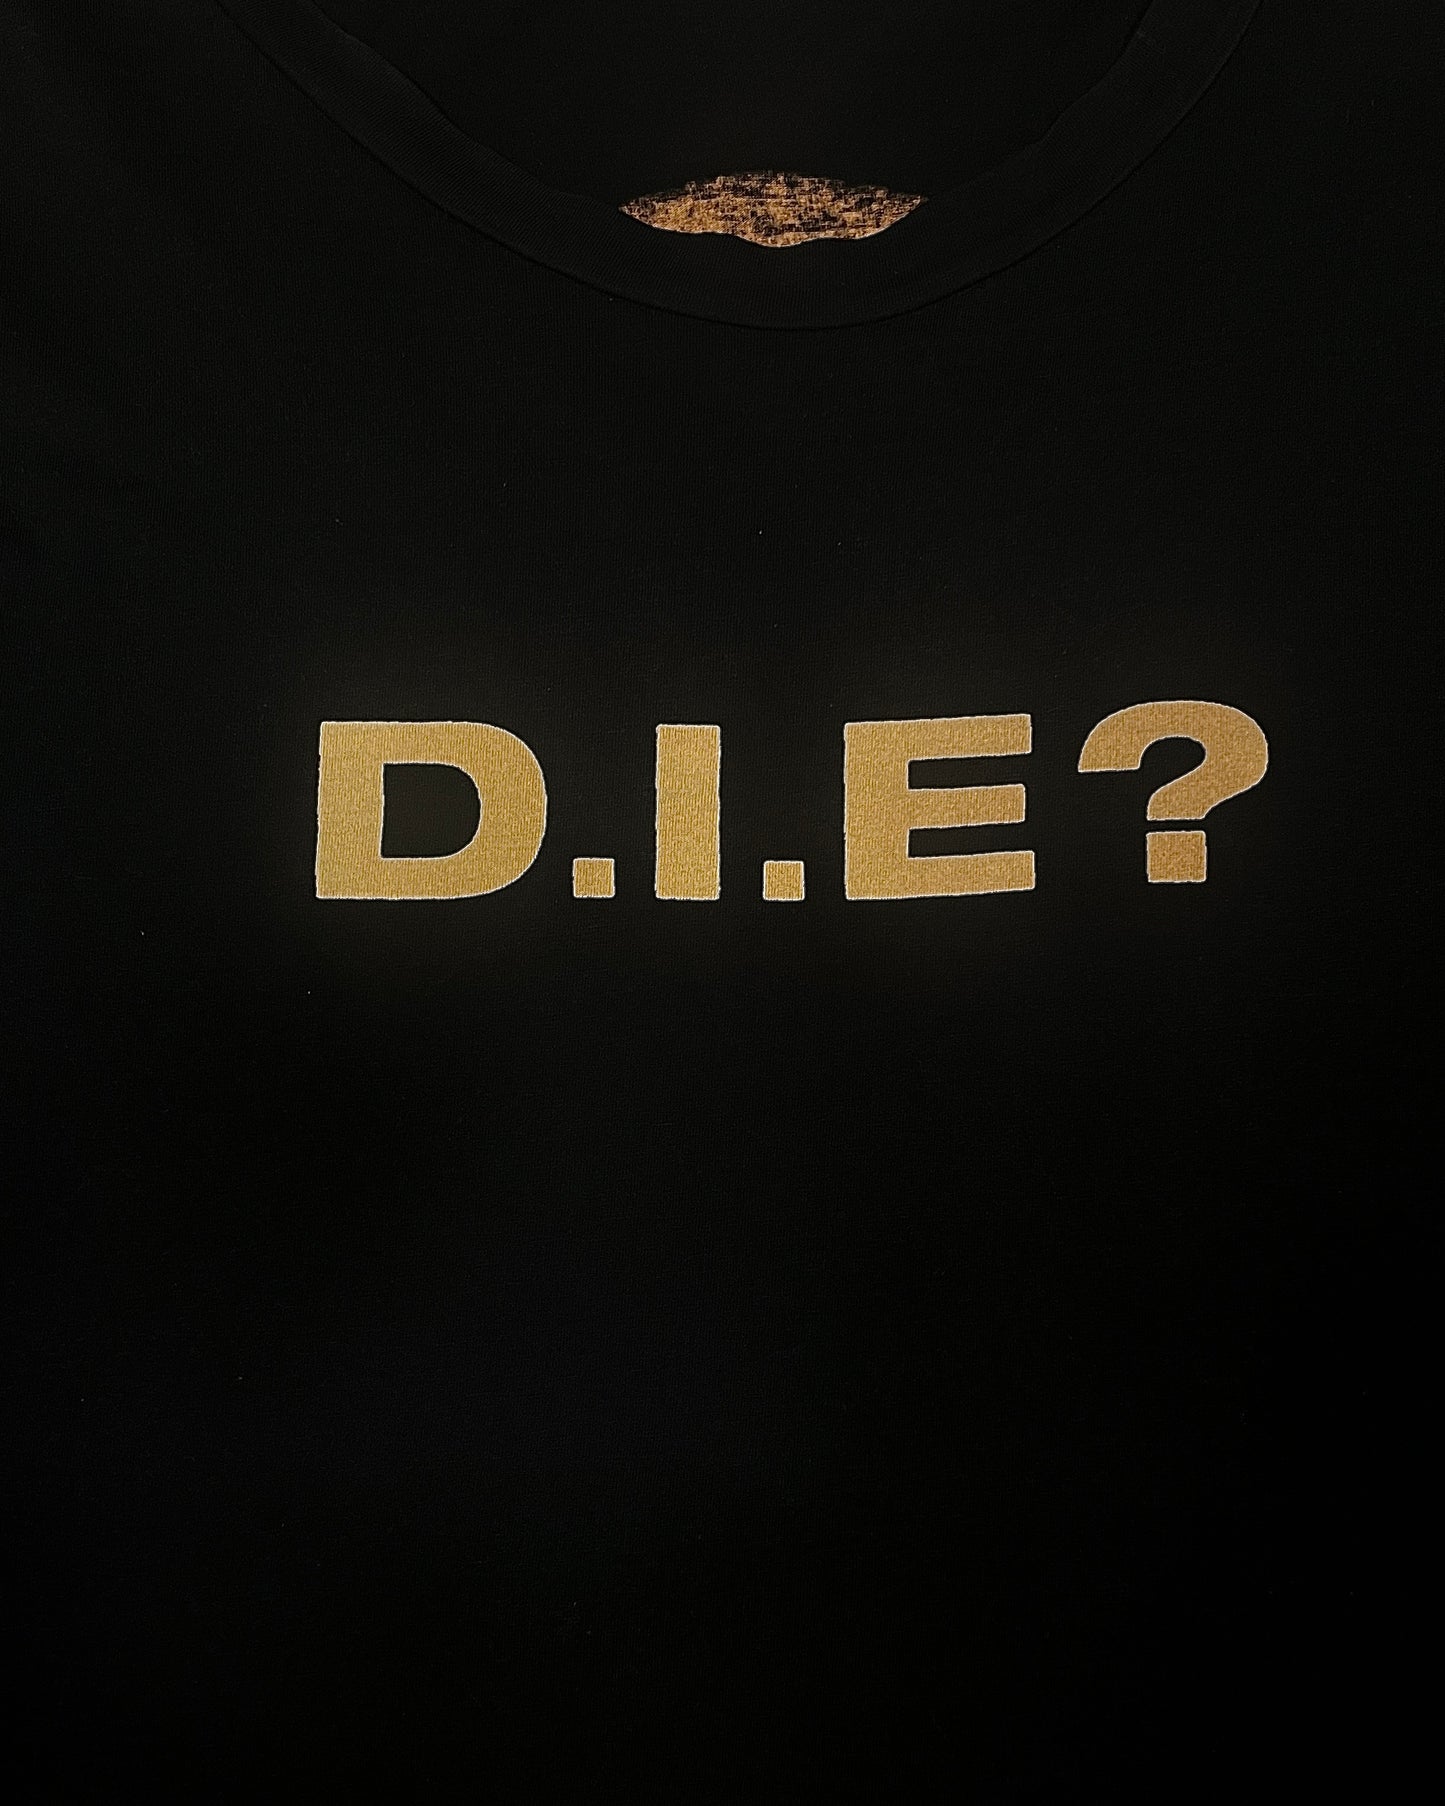 LGB "D.I.E ?" Flared-Sleeve Long-Sleeve